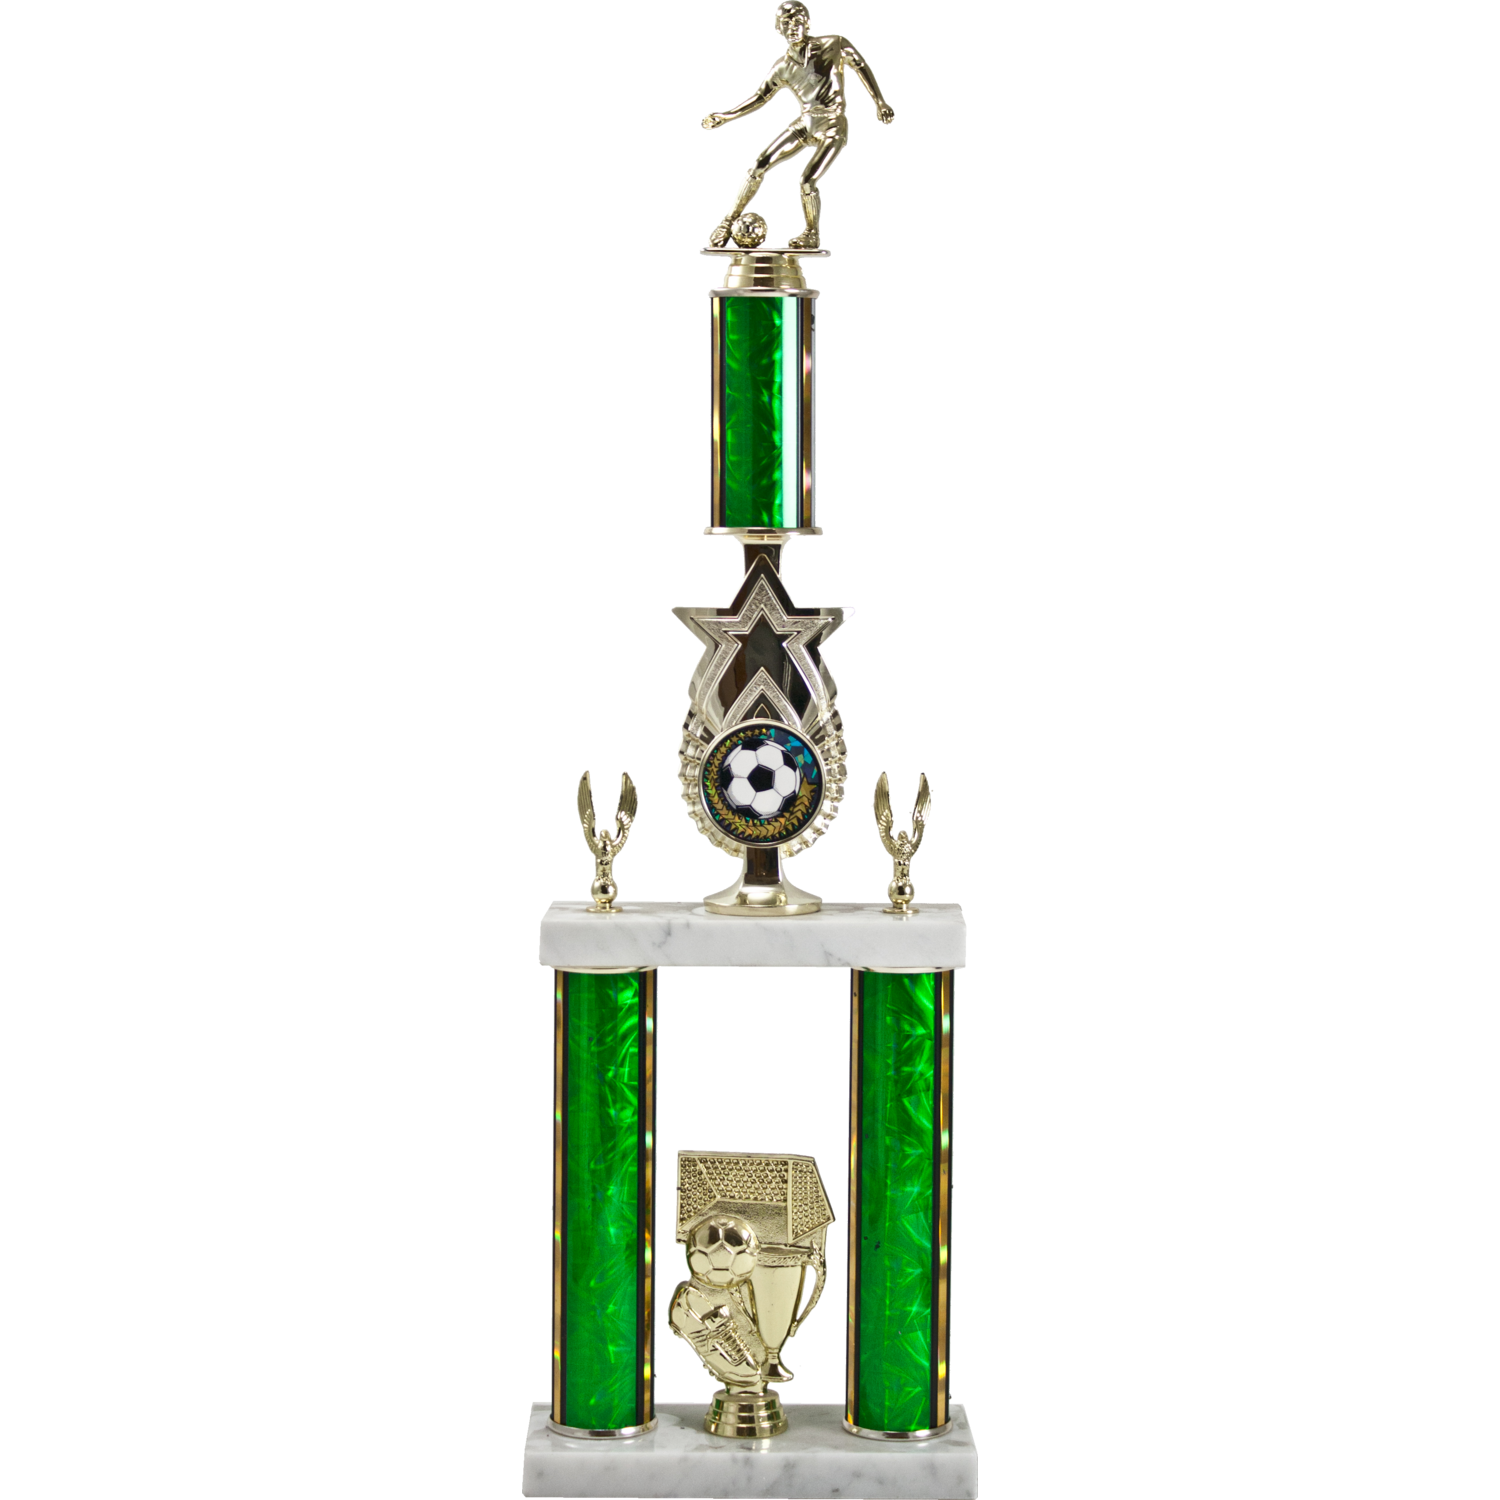 Star Riser 2-Post Trophy